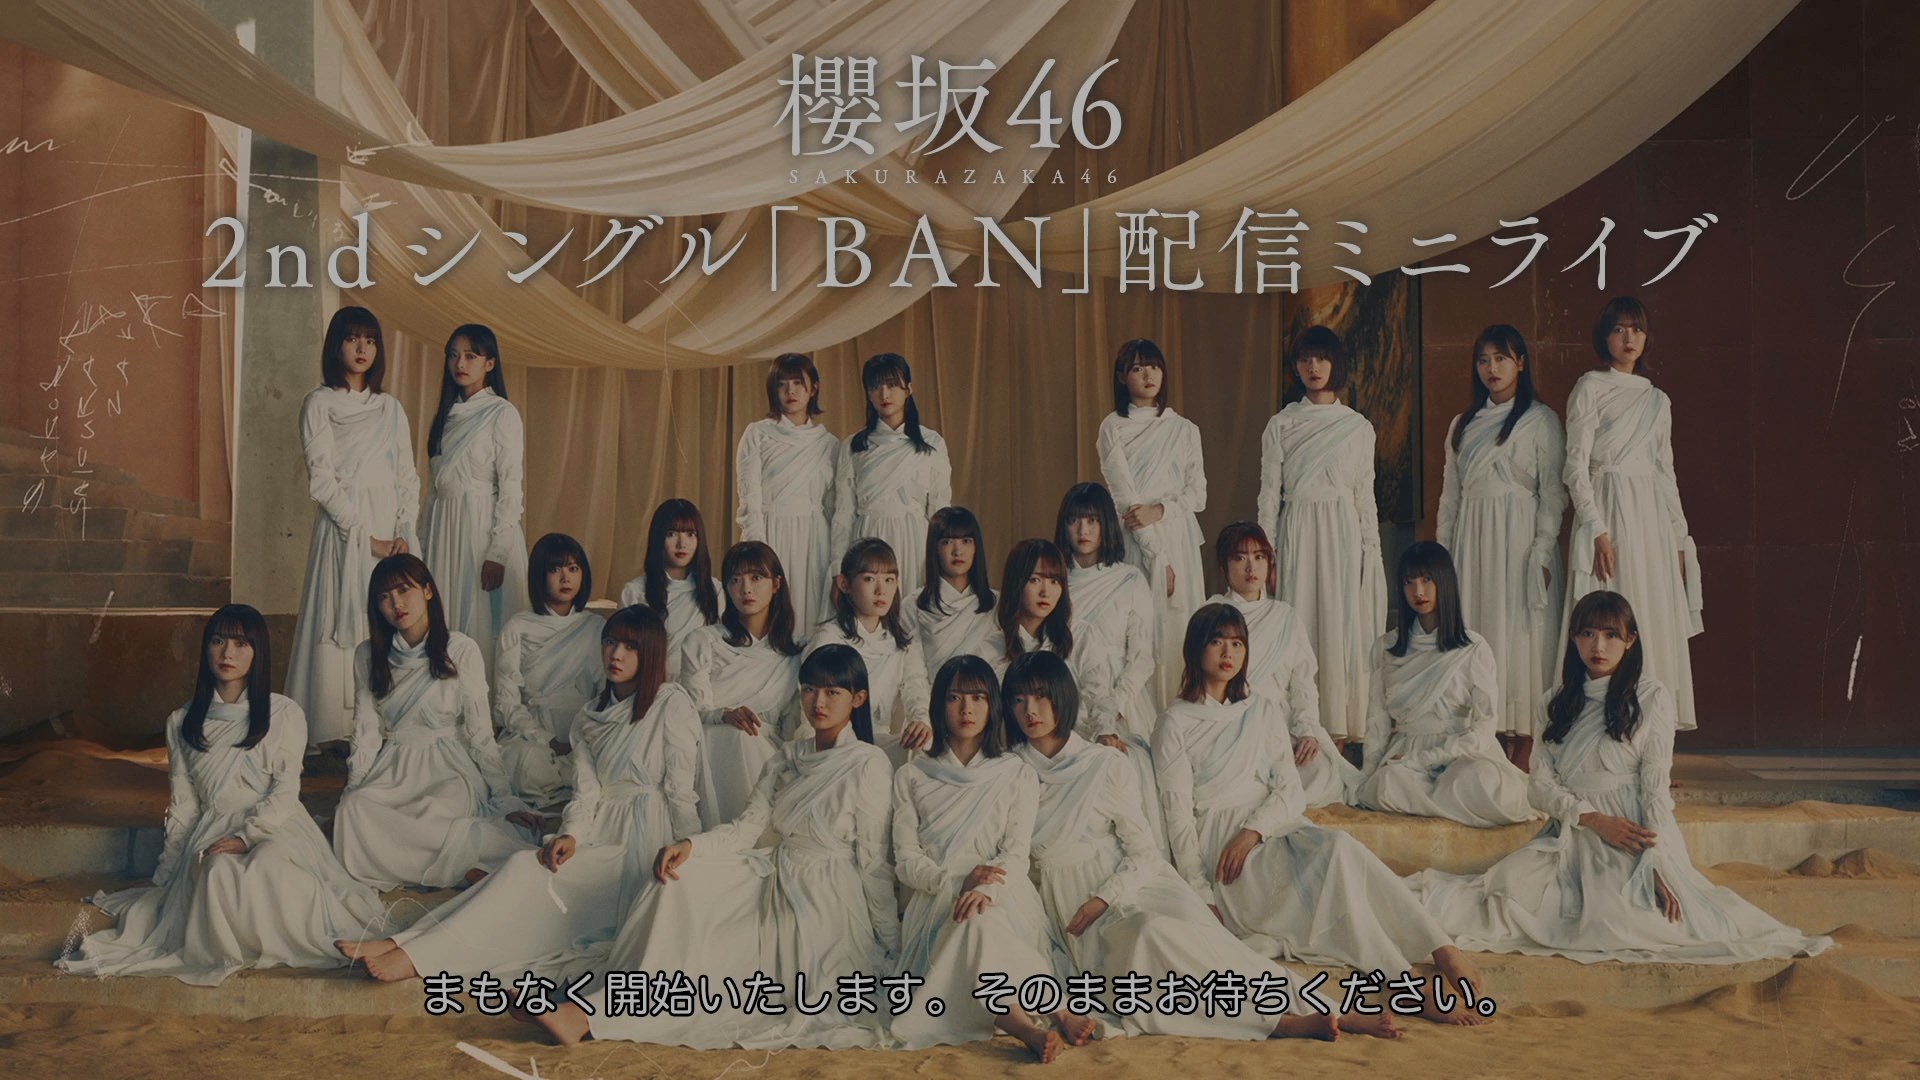 Sakurazaka46 2nd Single 'BAN' Streaming Mini Live 210514 (Stagecrowd)